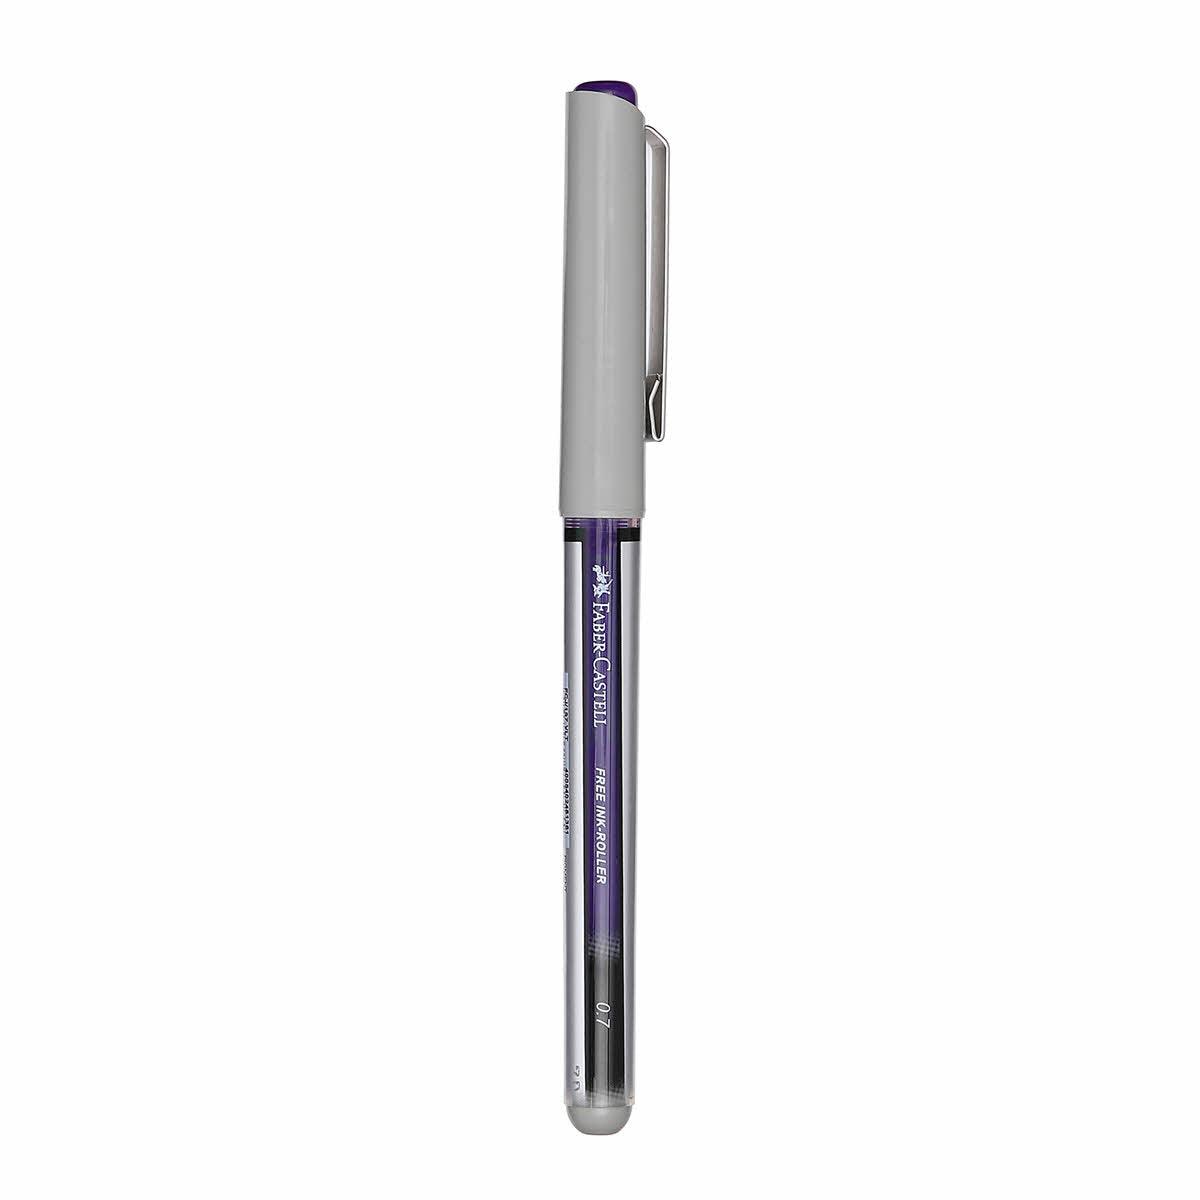 Faber Castell Free Ink Roller 157 0.7mm / Violet / 81361 - Karout Online -Karout Online Shopping In lebanon - Karout Express Delivery 